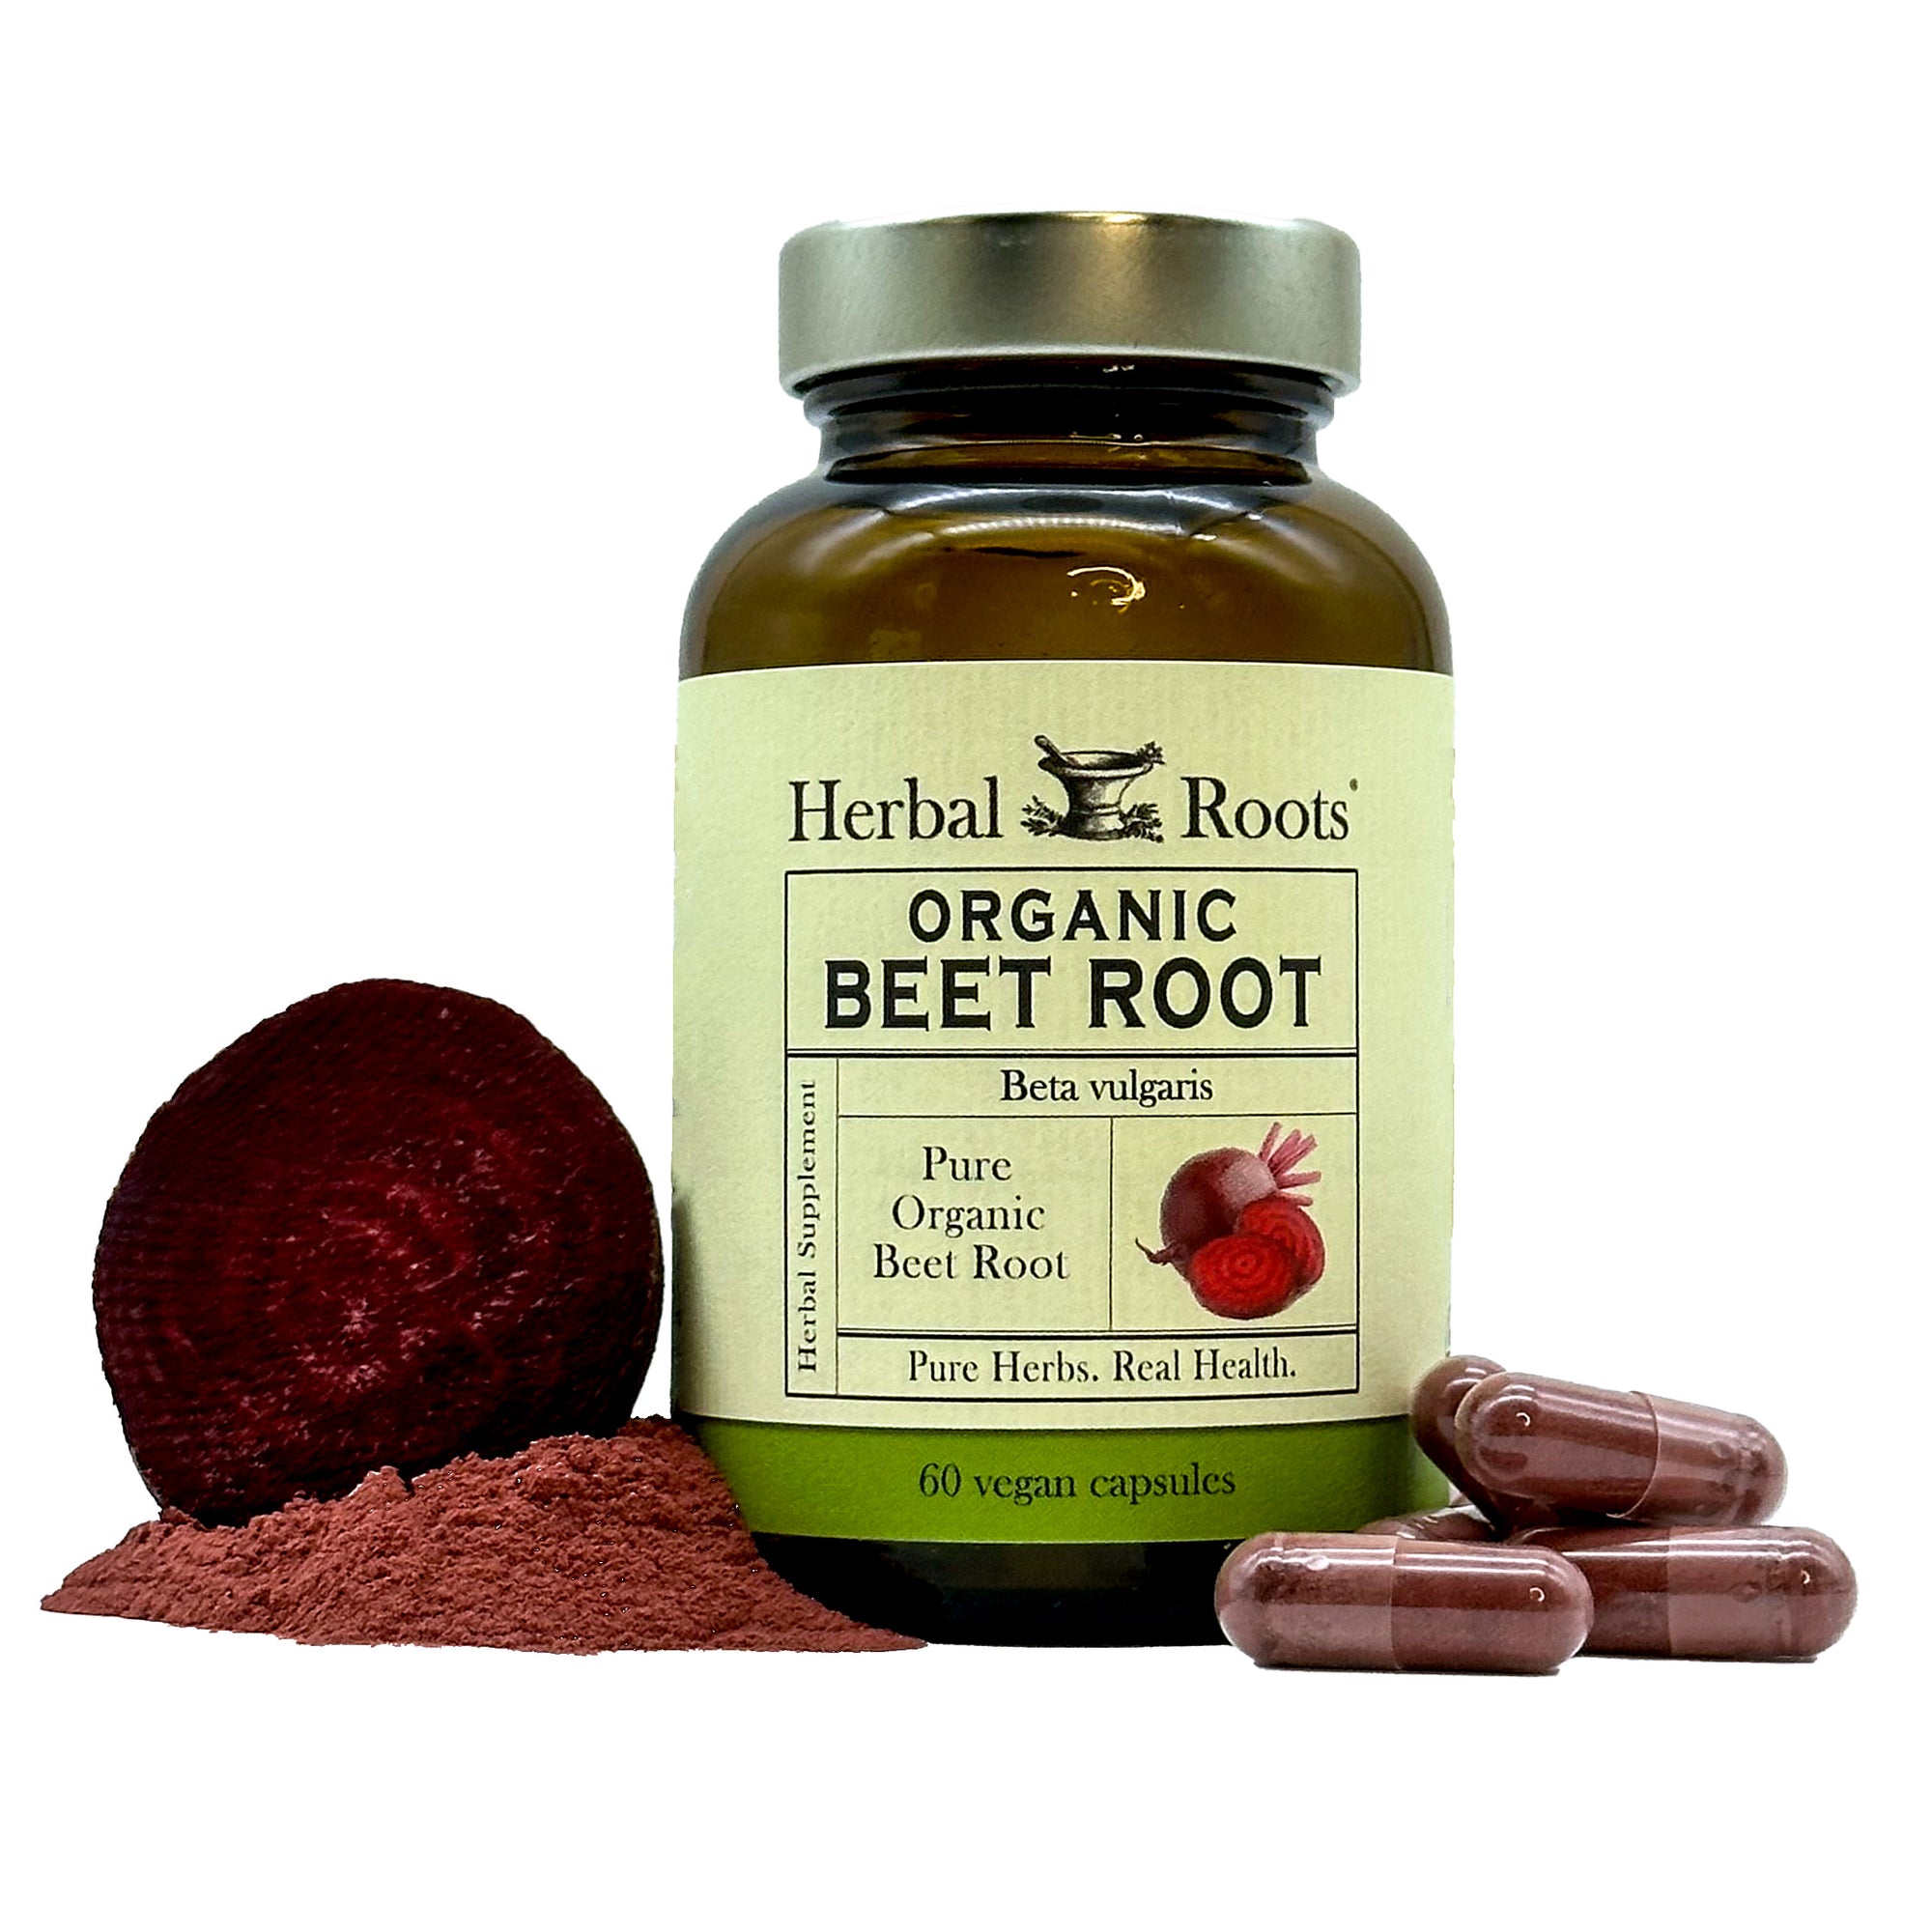 Organic Beet Root capsules, gray lid and dark brown bottle